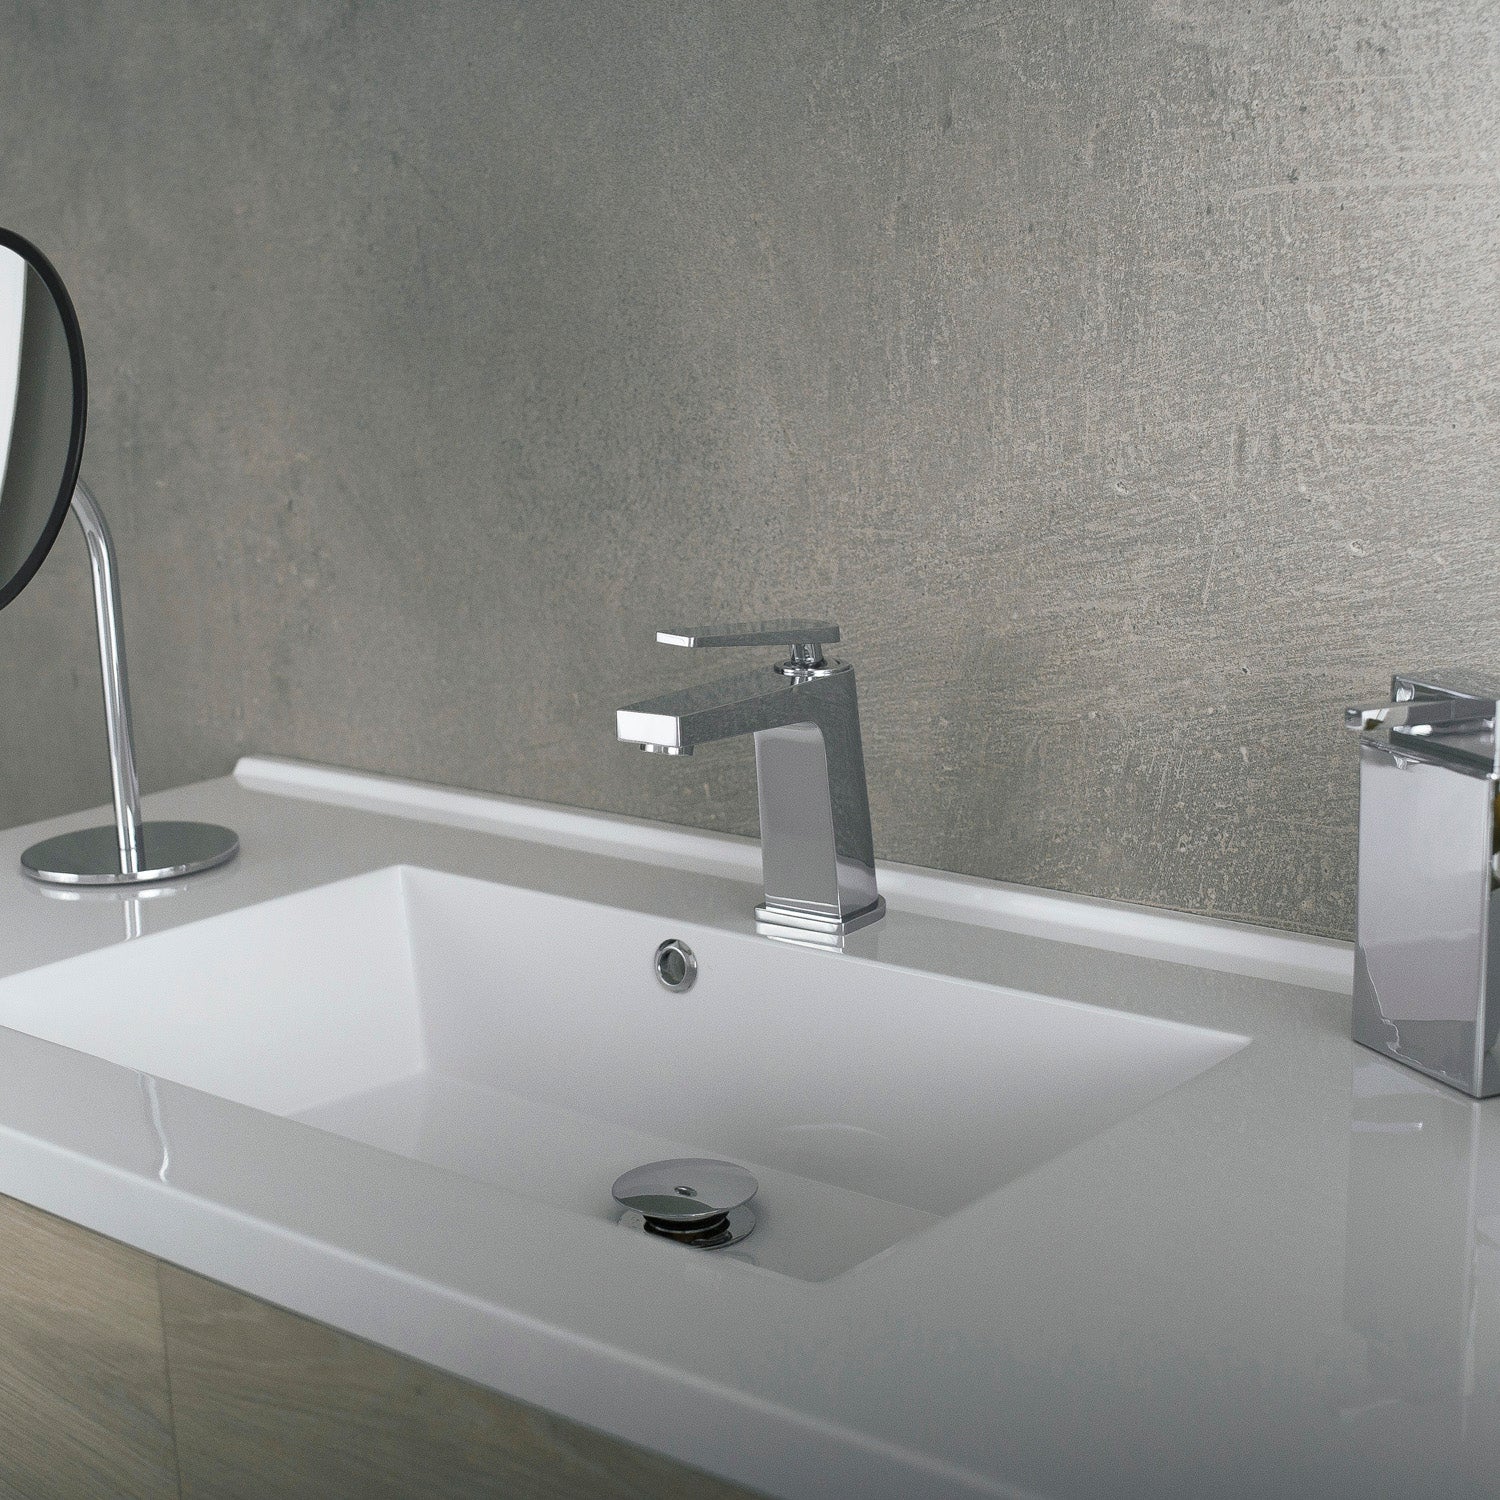 DAX Single Handle Bathroom Faucet, Brass Body, Chrome Finish, 4-3/4 x 5-7/8 Inches (DAX-9802)